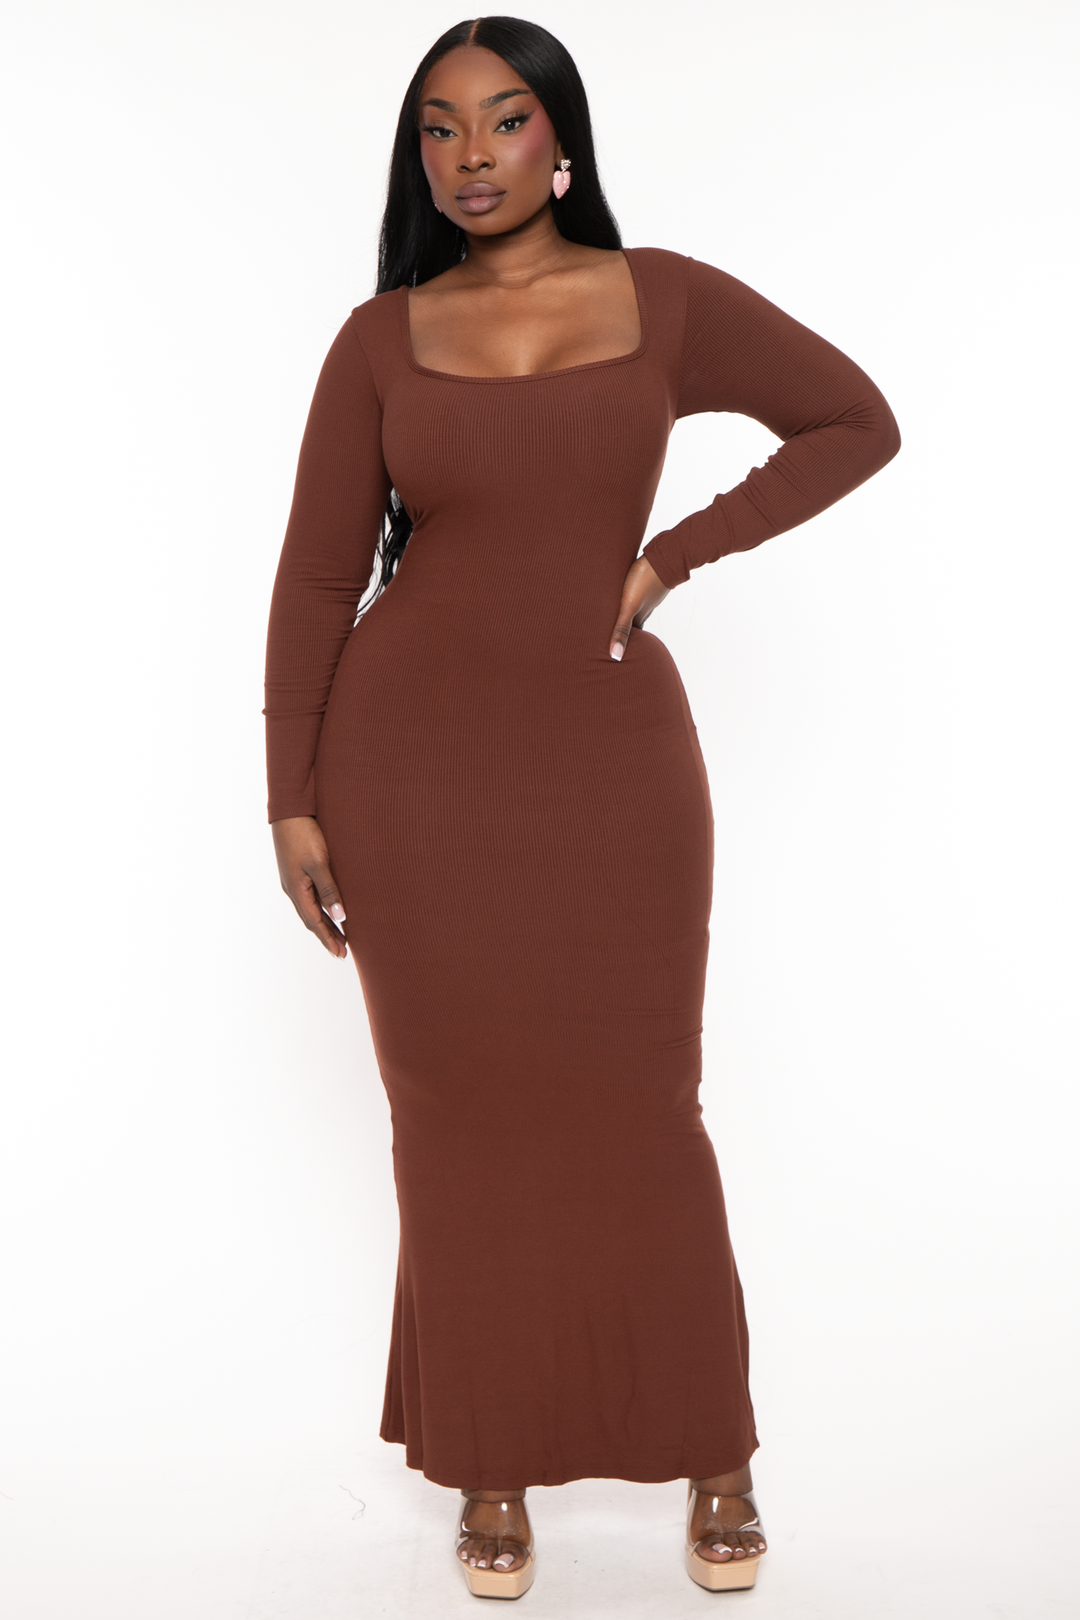 XIAMEN HEXIN INTERNATIONAL Dresses 1X Plus Size Elanor Shapeware Dress - Brown